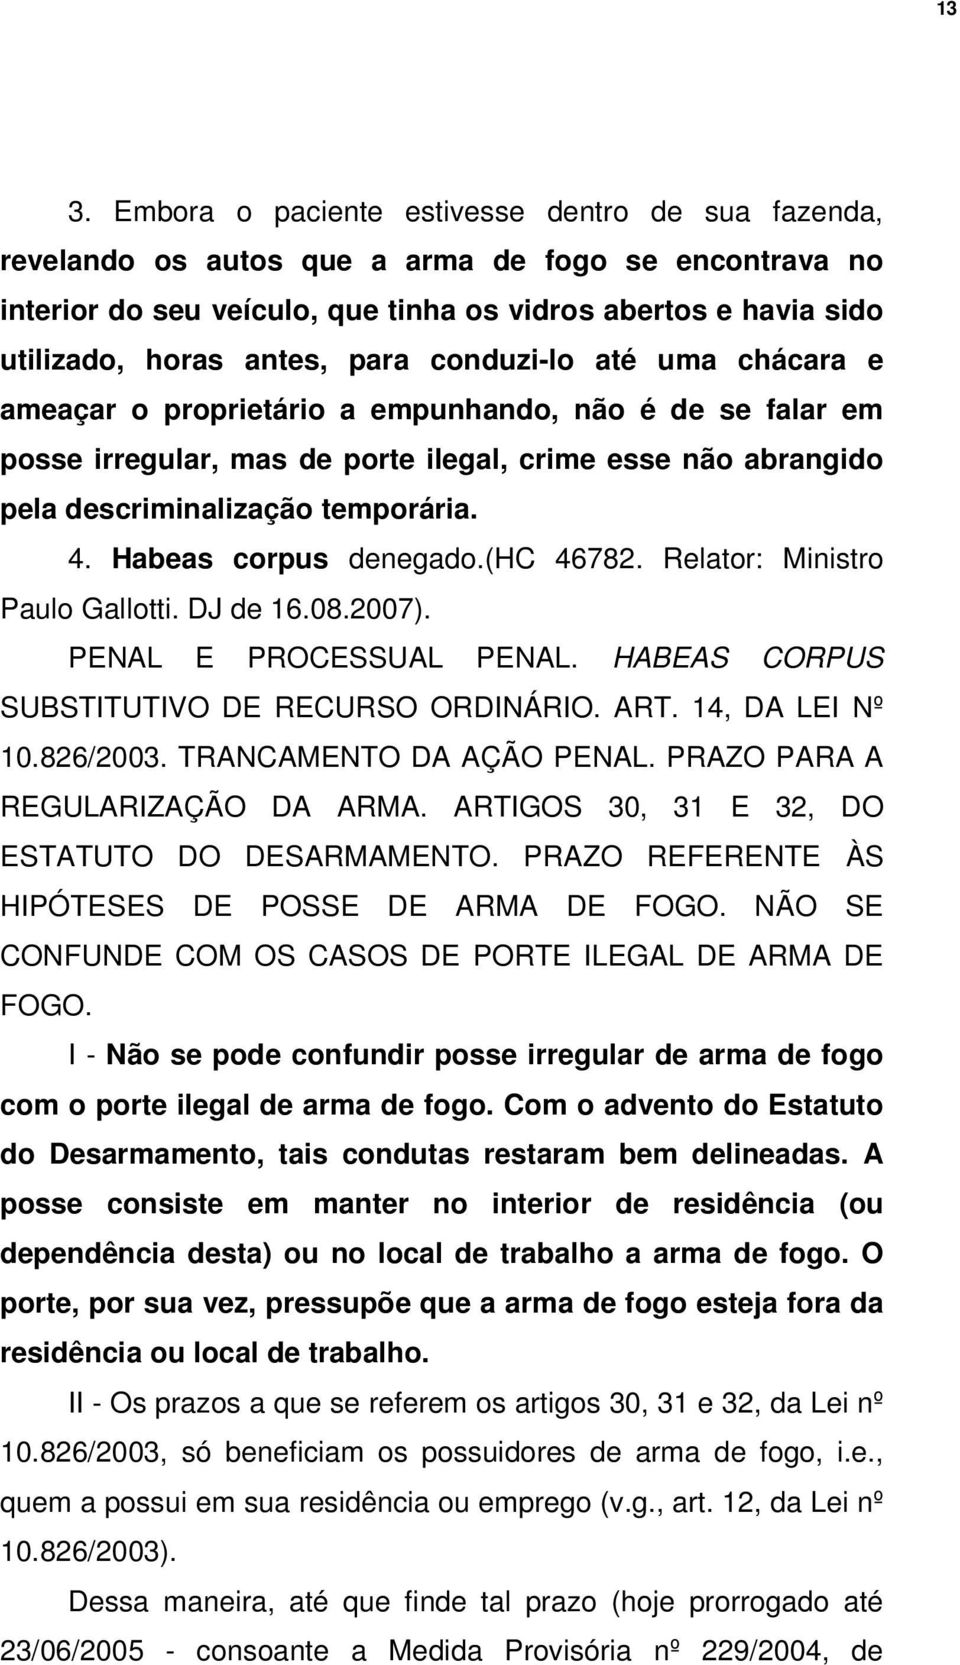 Habeas corpus denegado.(hc 46782. Relator: Ministro Paulo Gallotti. DJ de 16.08.2007). PENAL E PROCESSUAL PENAL. HABEAS CORPUS SUBSTITUTIVO DE RECURSO ORDINÁRIO. ART. 14, DA LEI Nº 10.826/2003.